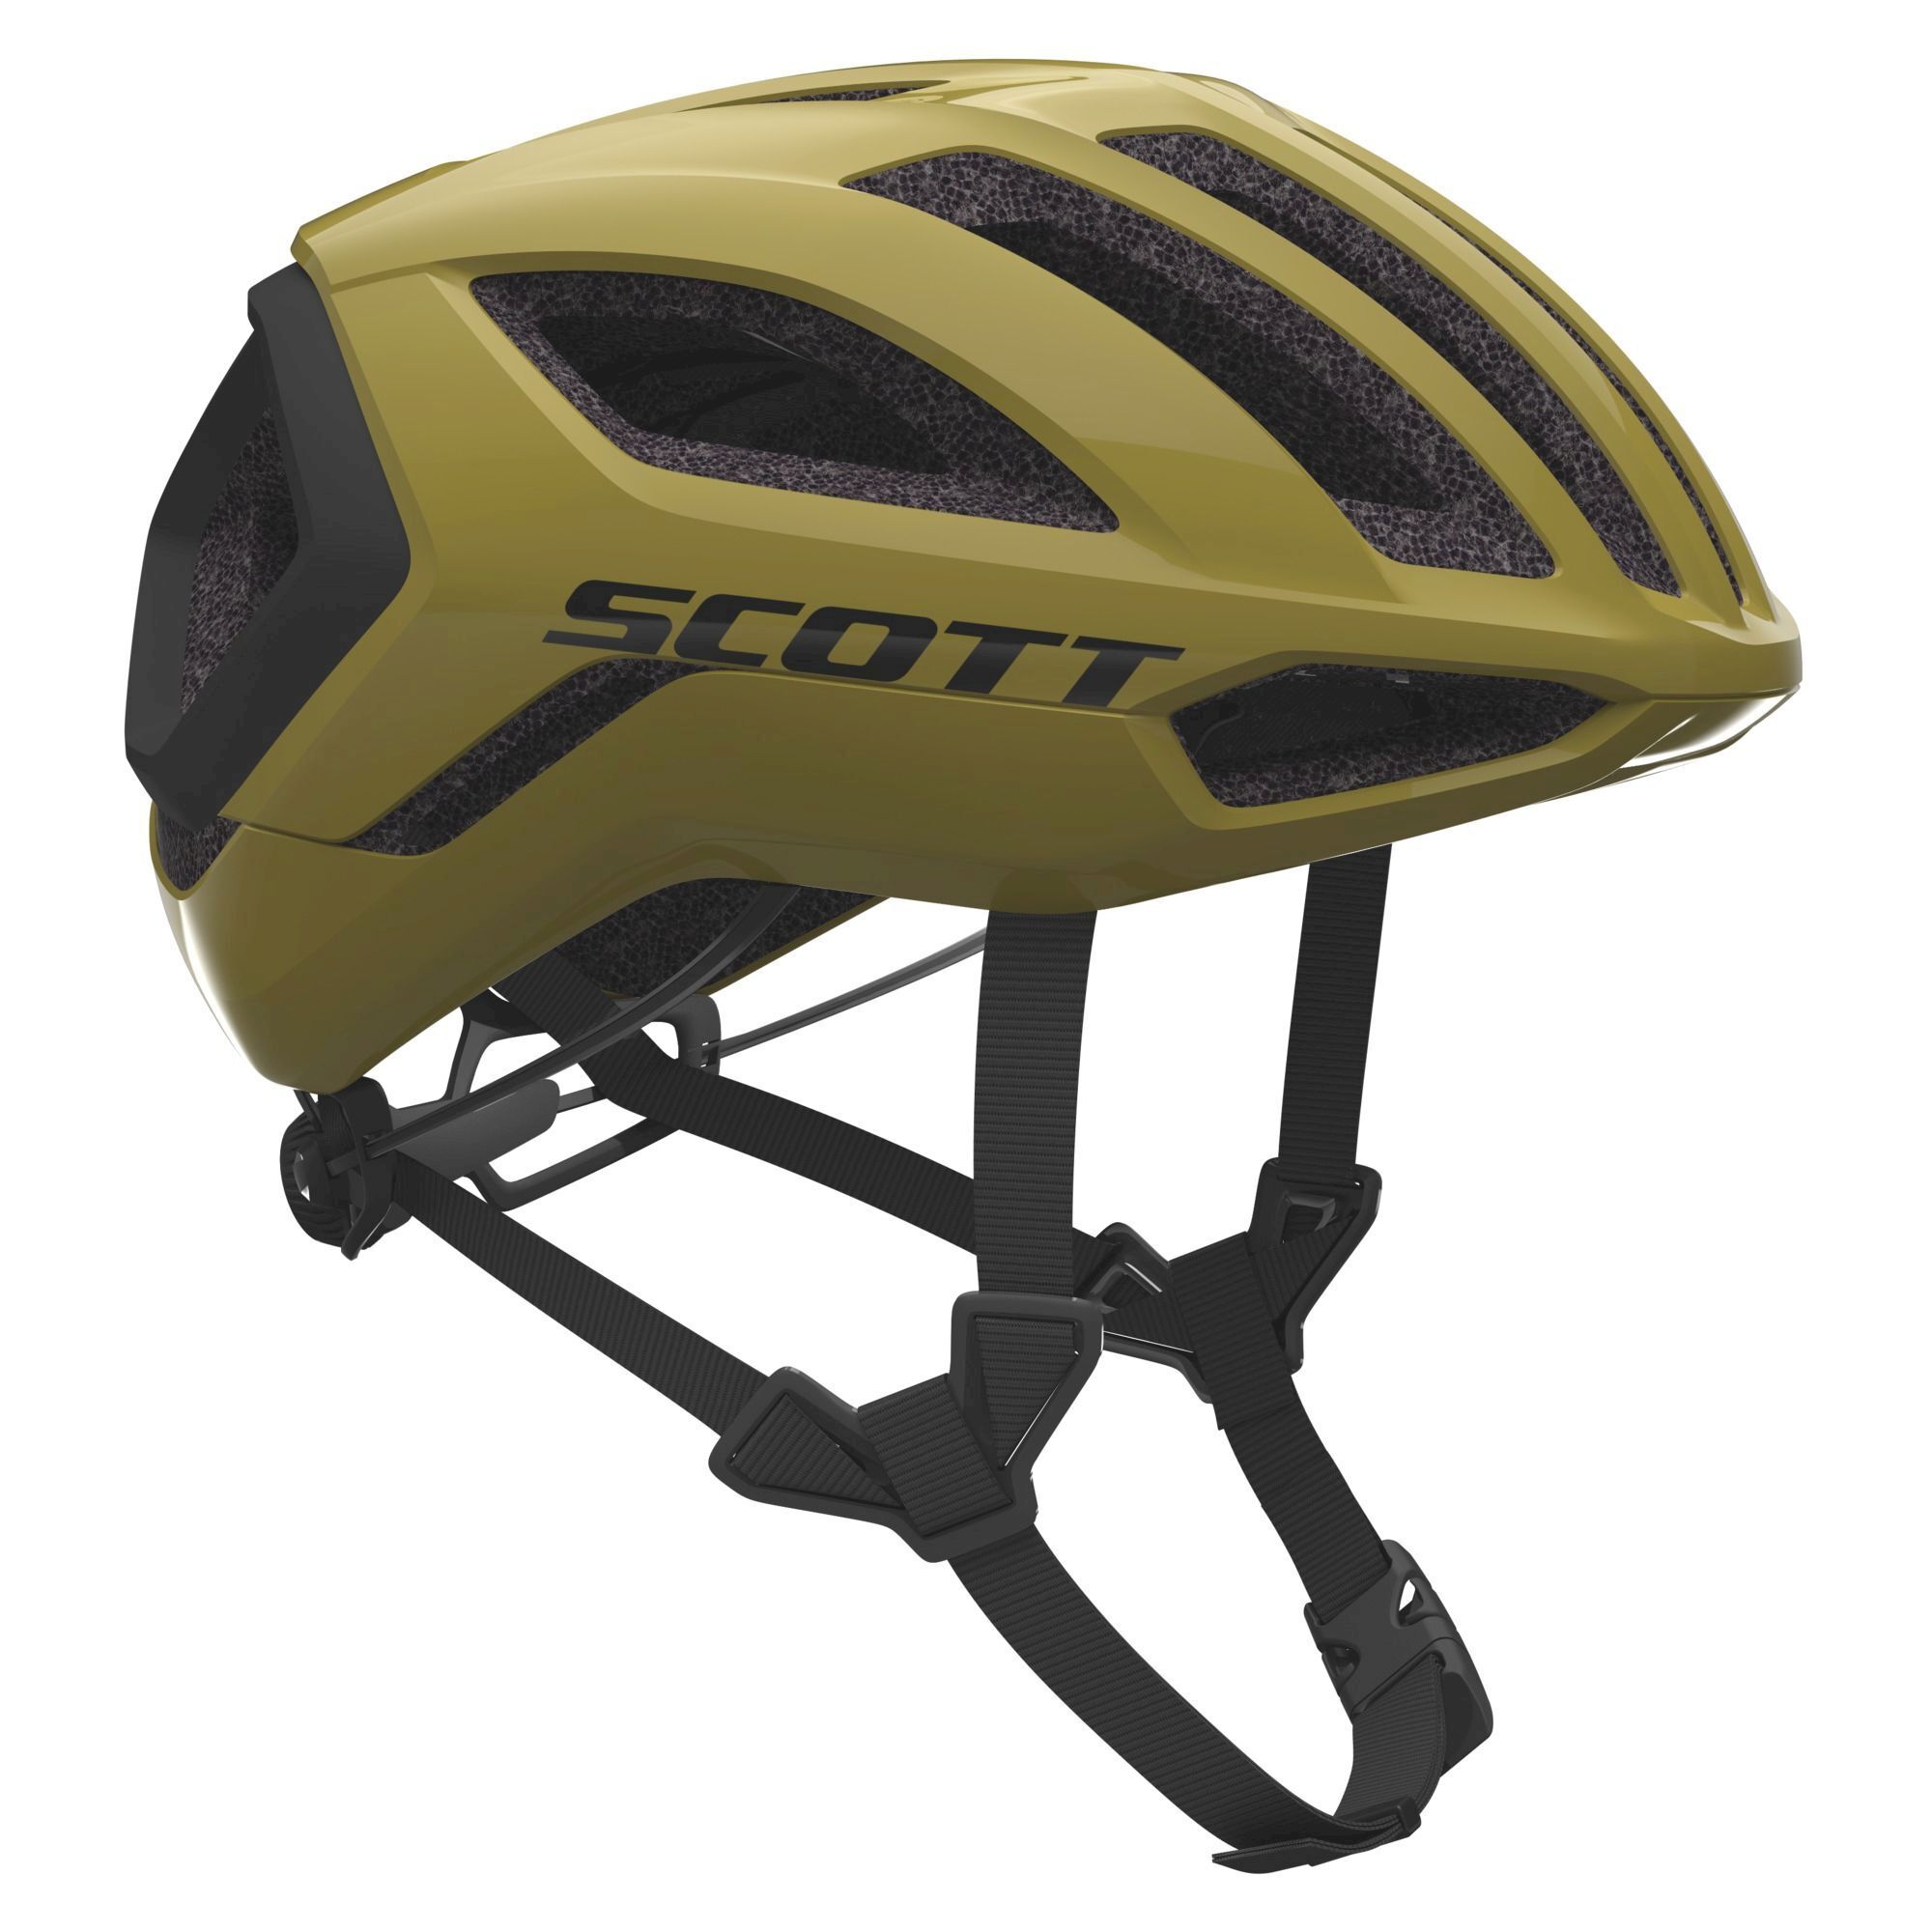 Scott Centric PLUS (CE) - Road bike helmet